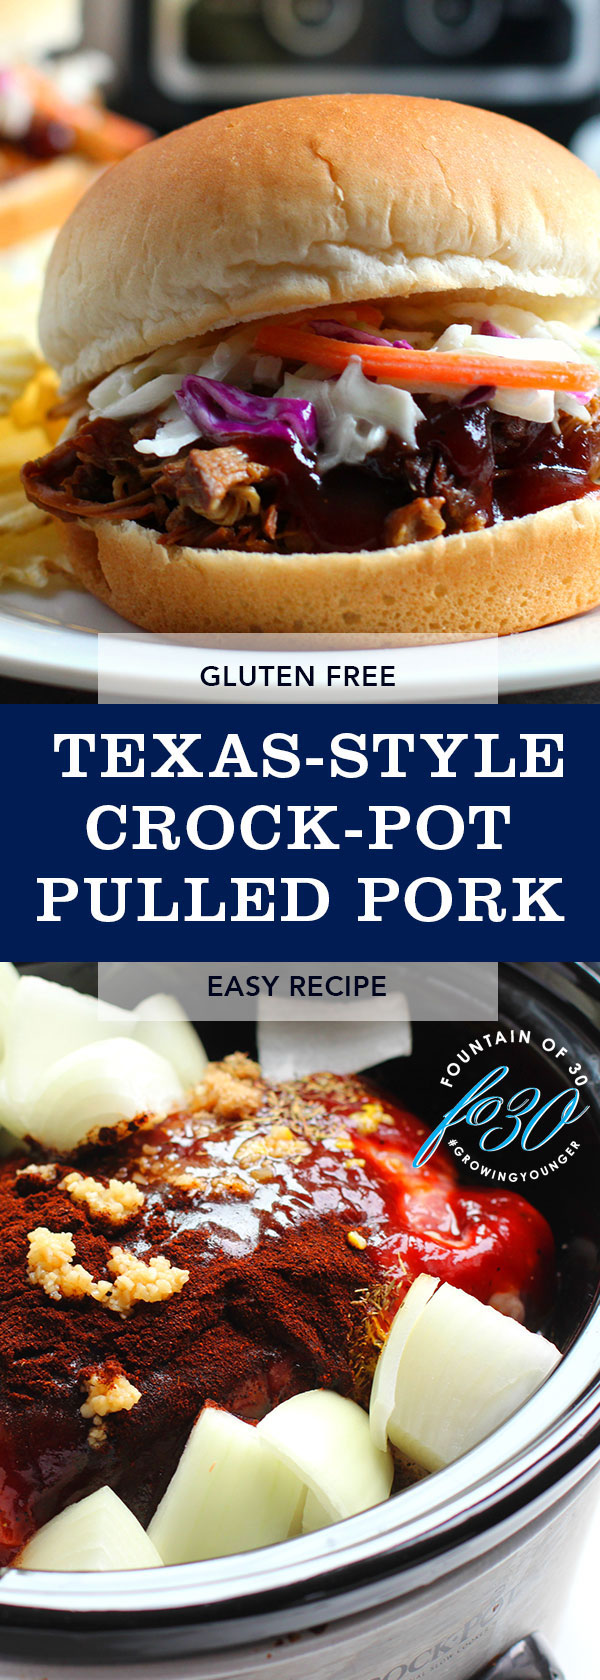 pulled pork crock pot recipe fountainof30